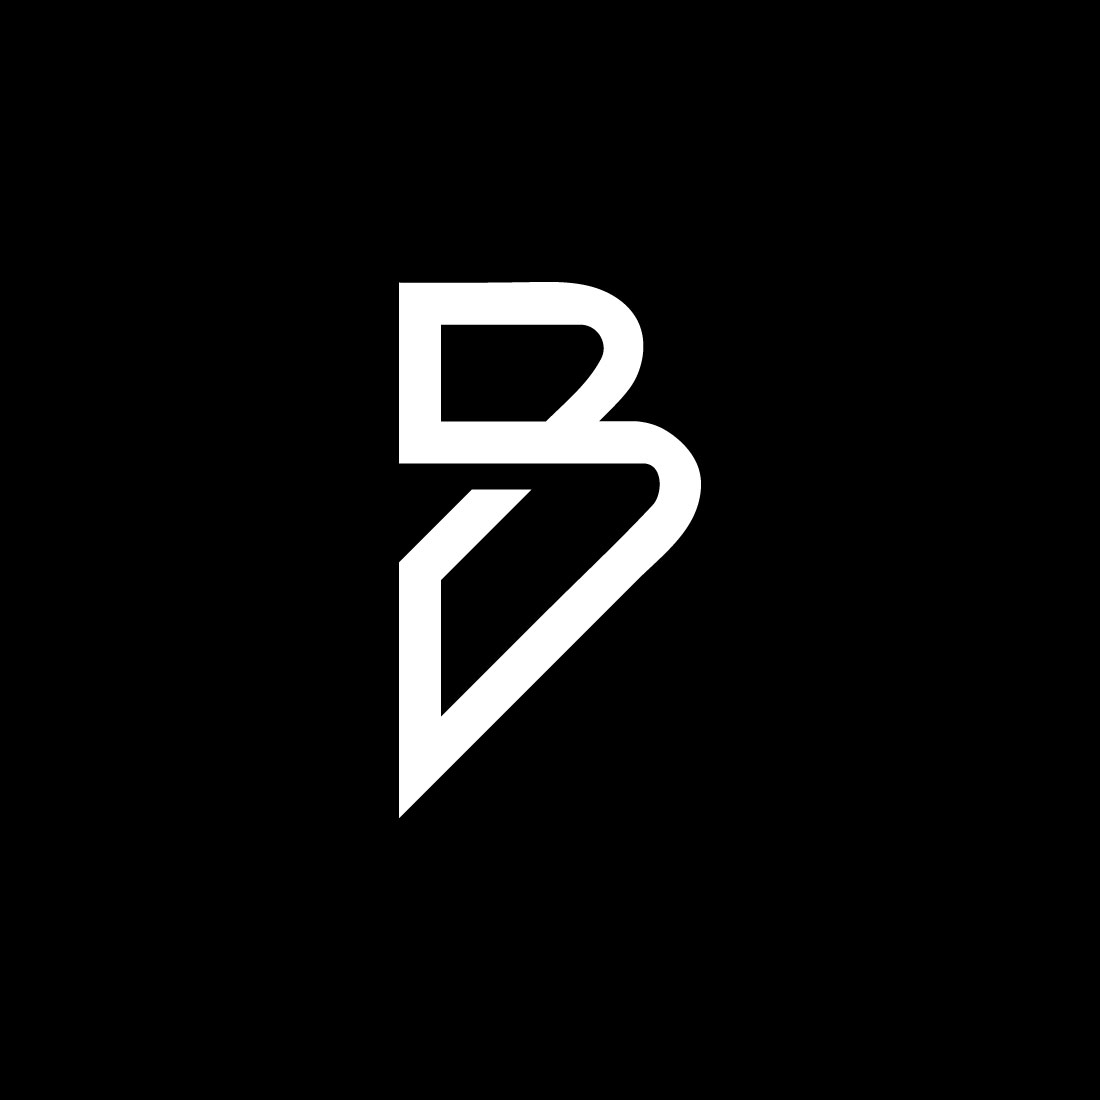 Simple B Logo Design cover image.